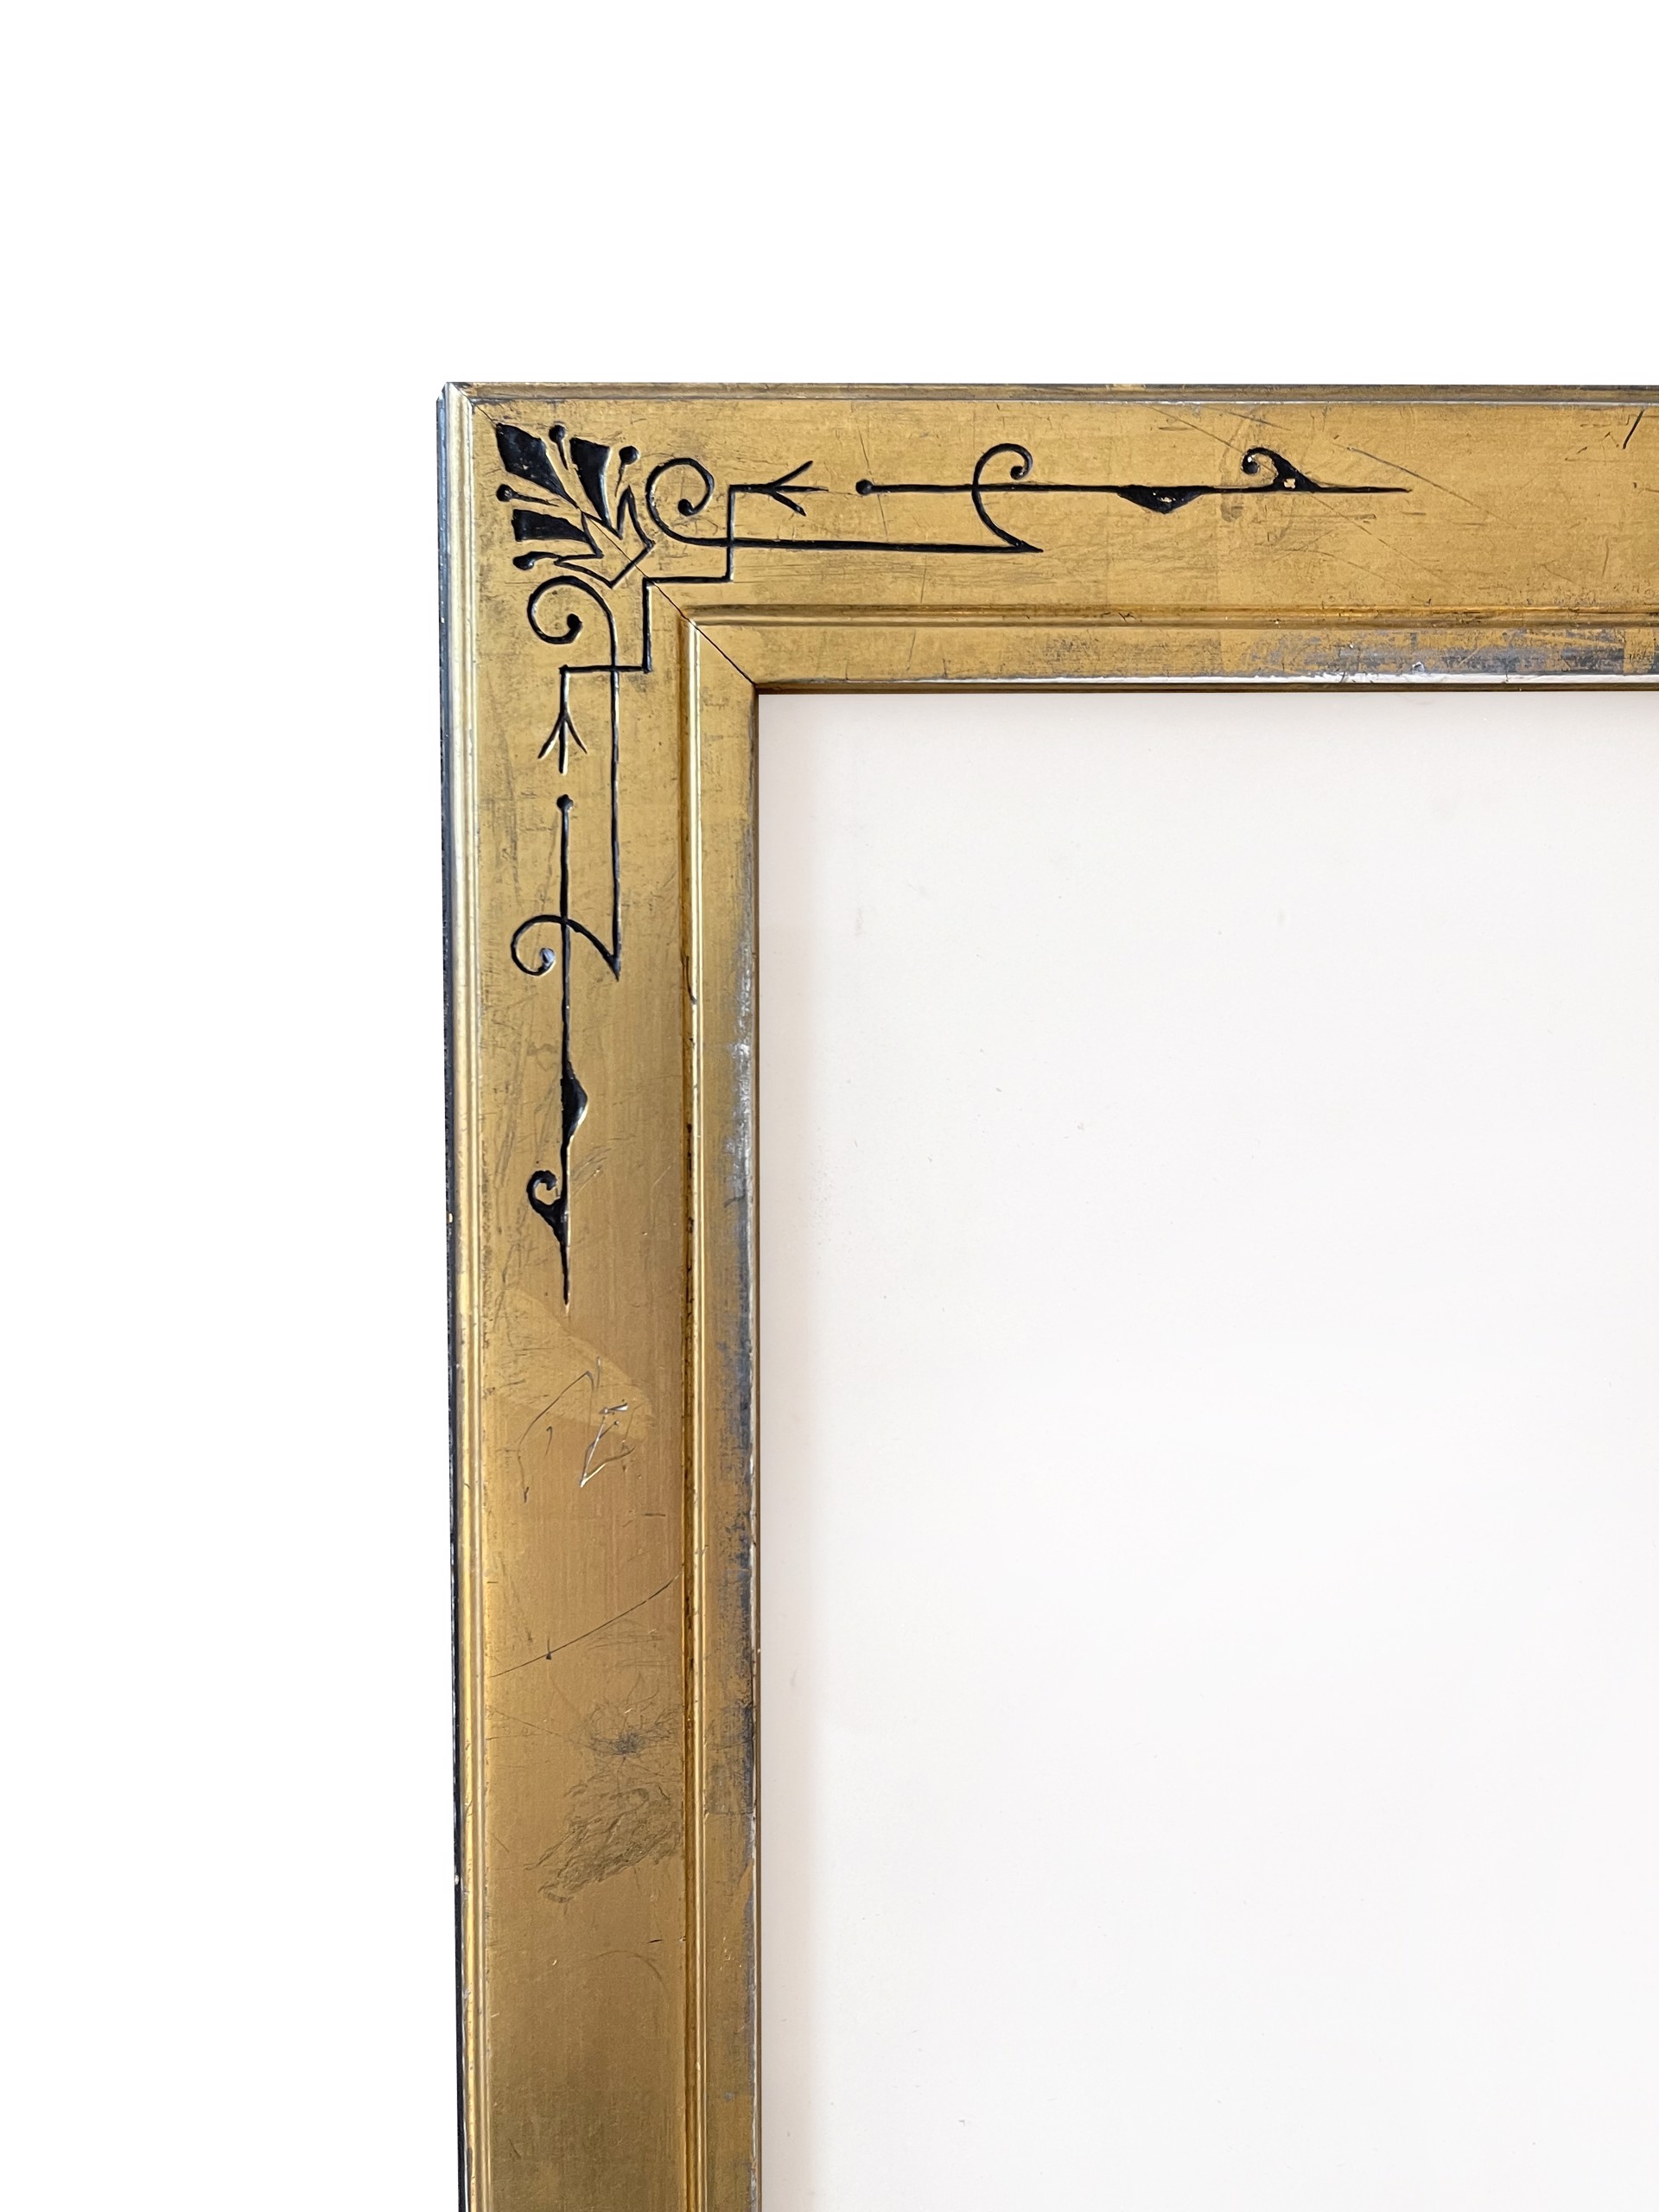 Antique Gold Gilt, Spoon Carved Frame by Antique Frame